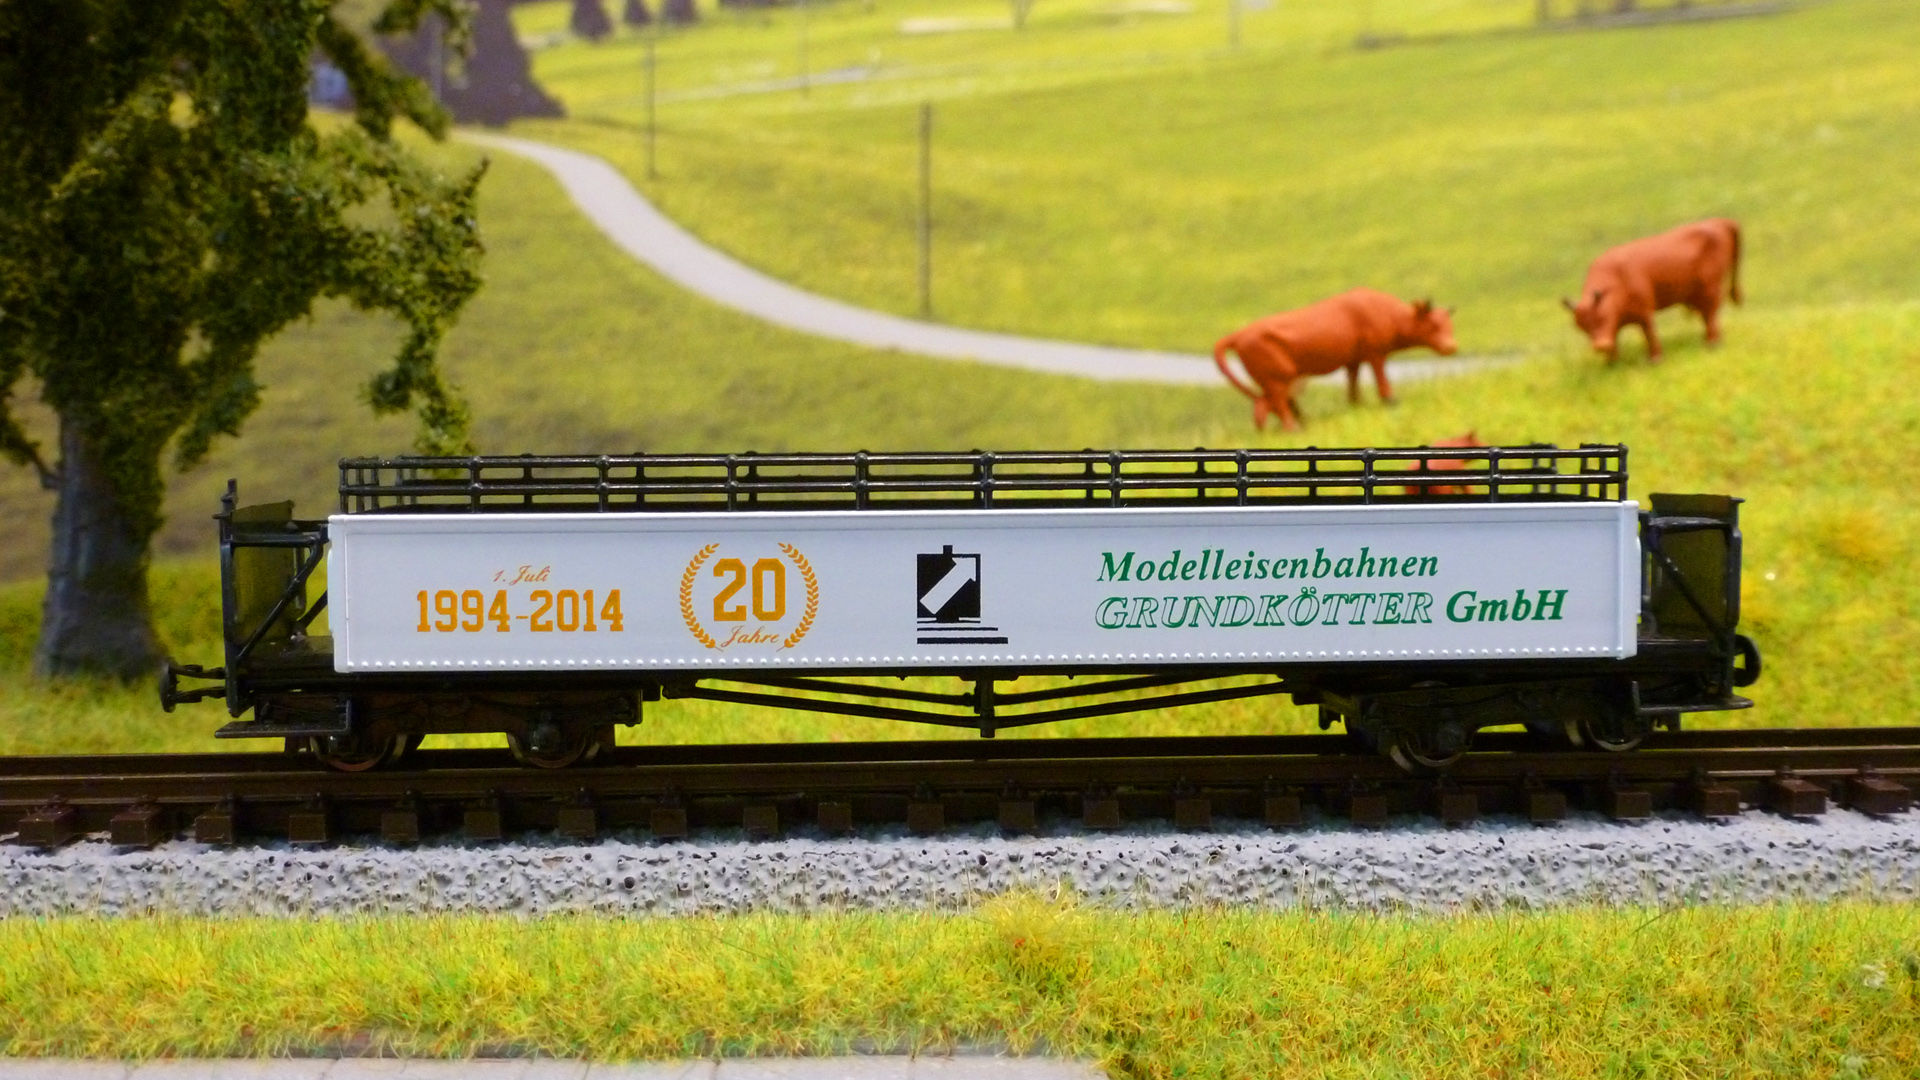 Jubiläumsmodell zum Geschäftsjubiläum 
© Modelleisenbahnen Grundkötter GmbH